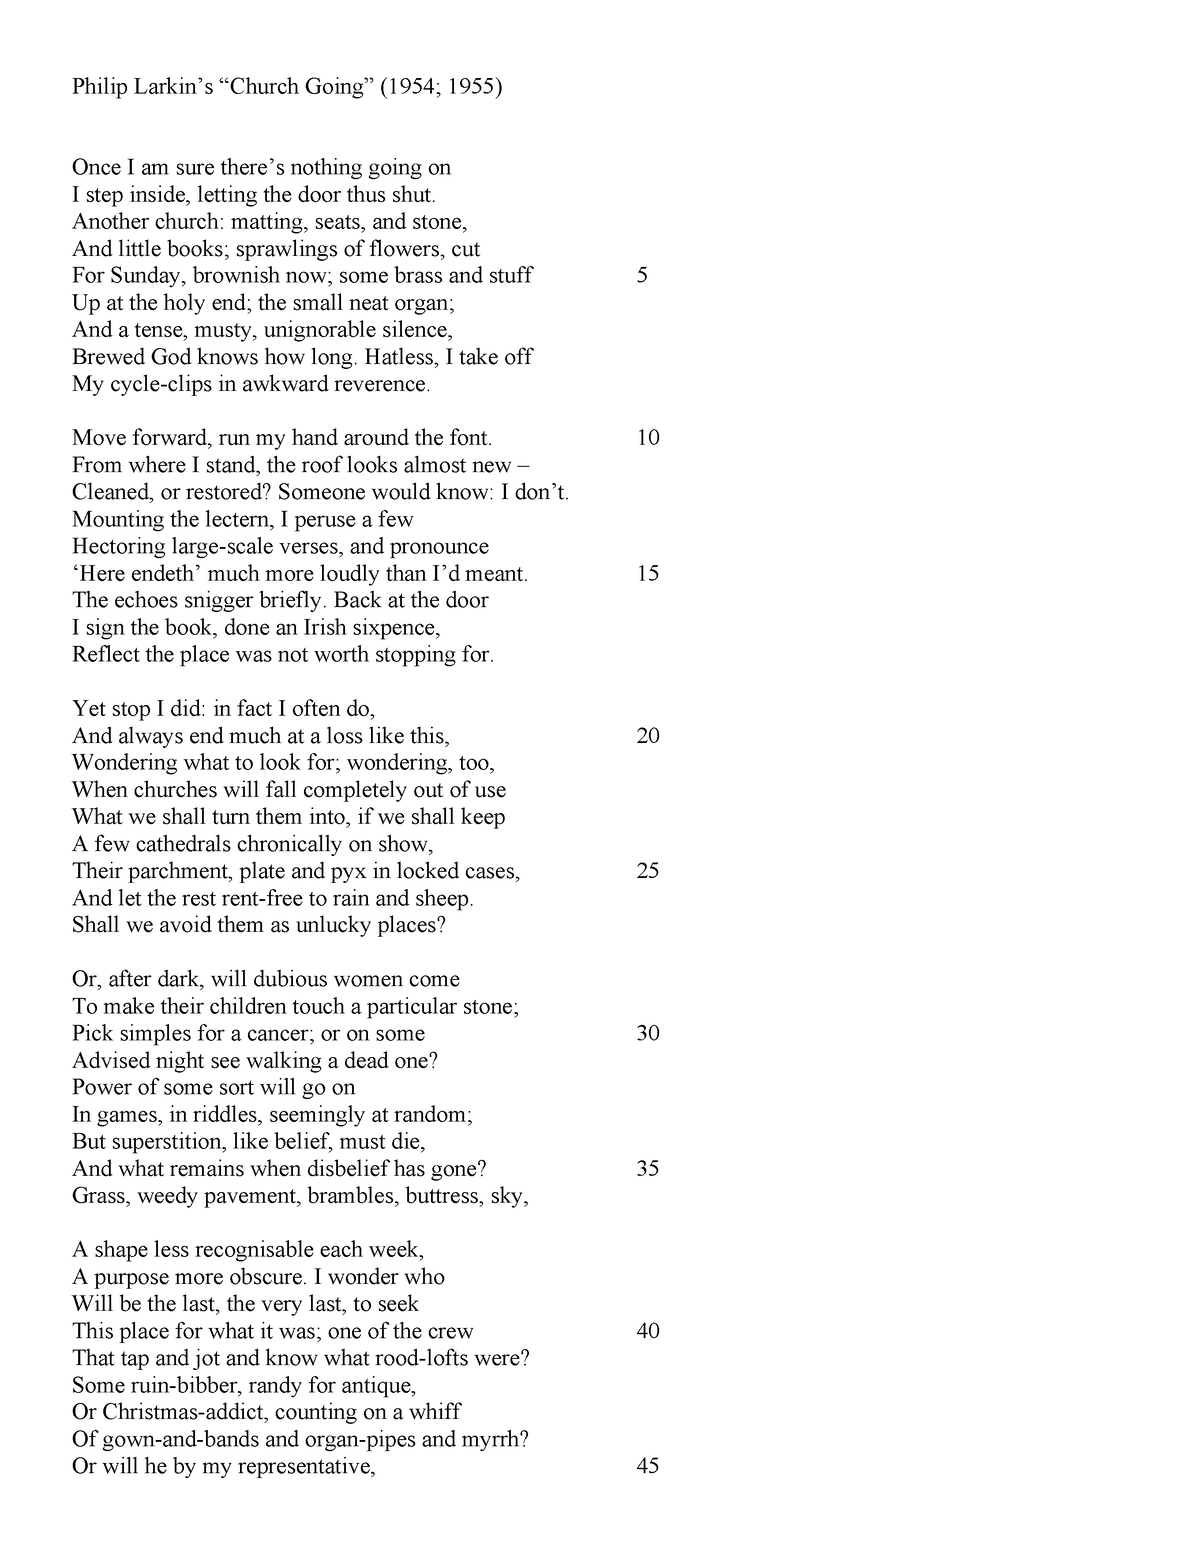 Church Going Poem - Poem - Philip Larkin’s “church Going” (1954; 1955 